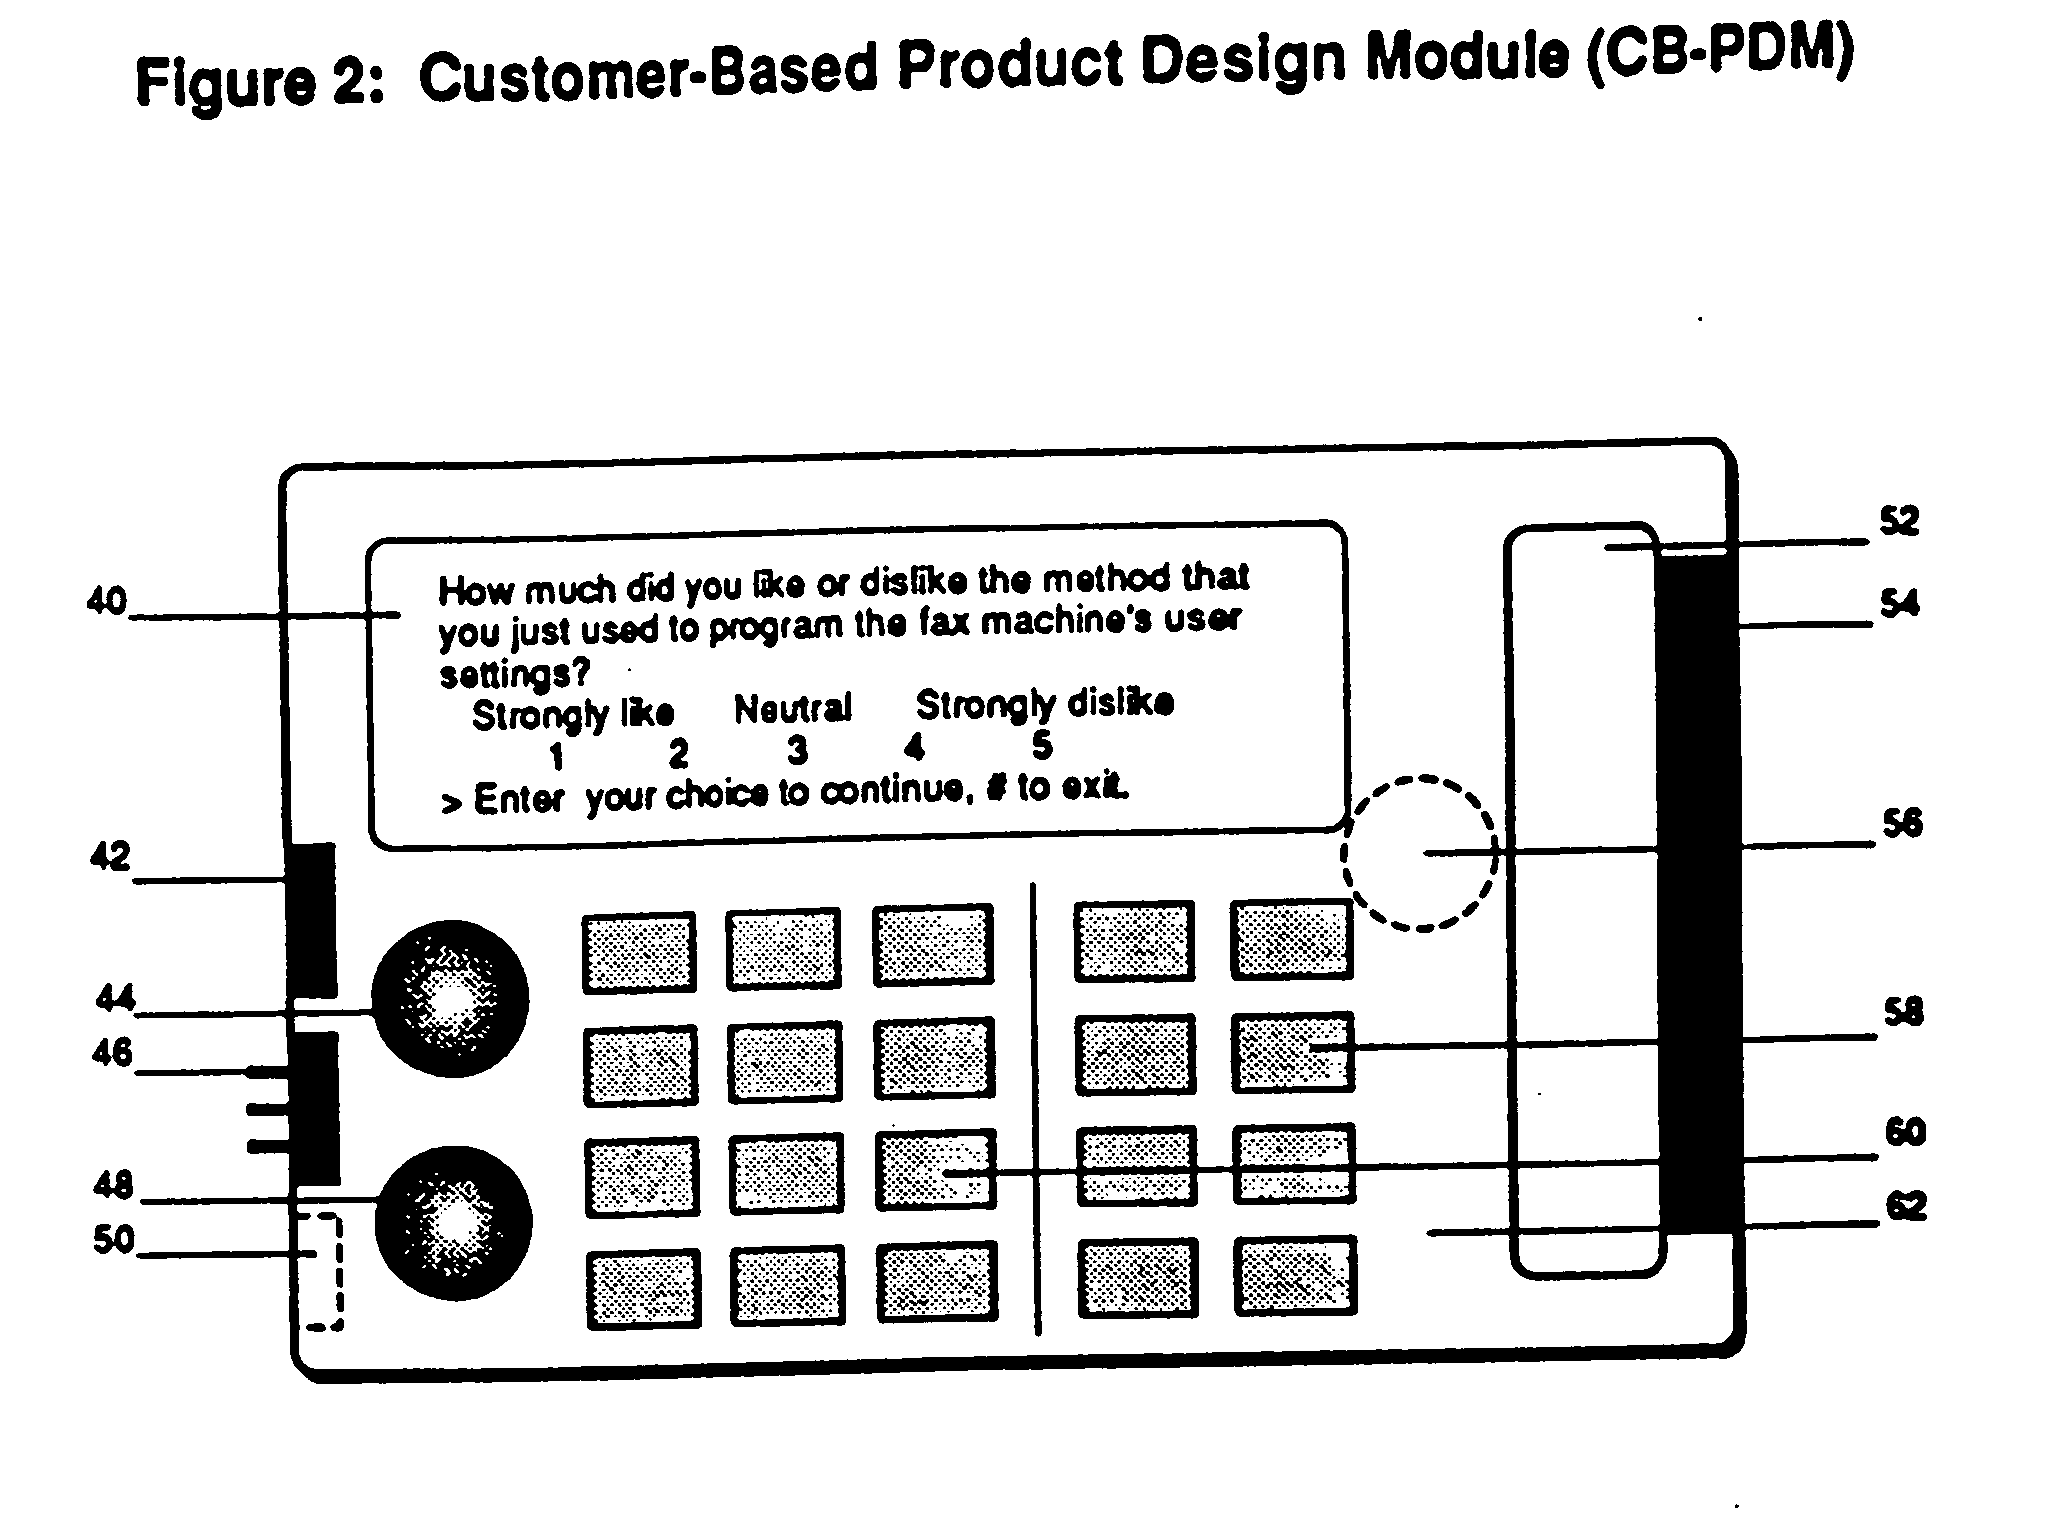 Customer-based product design module